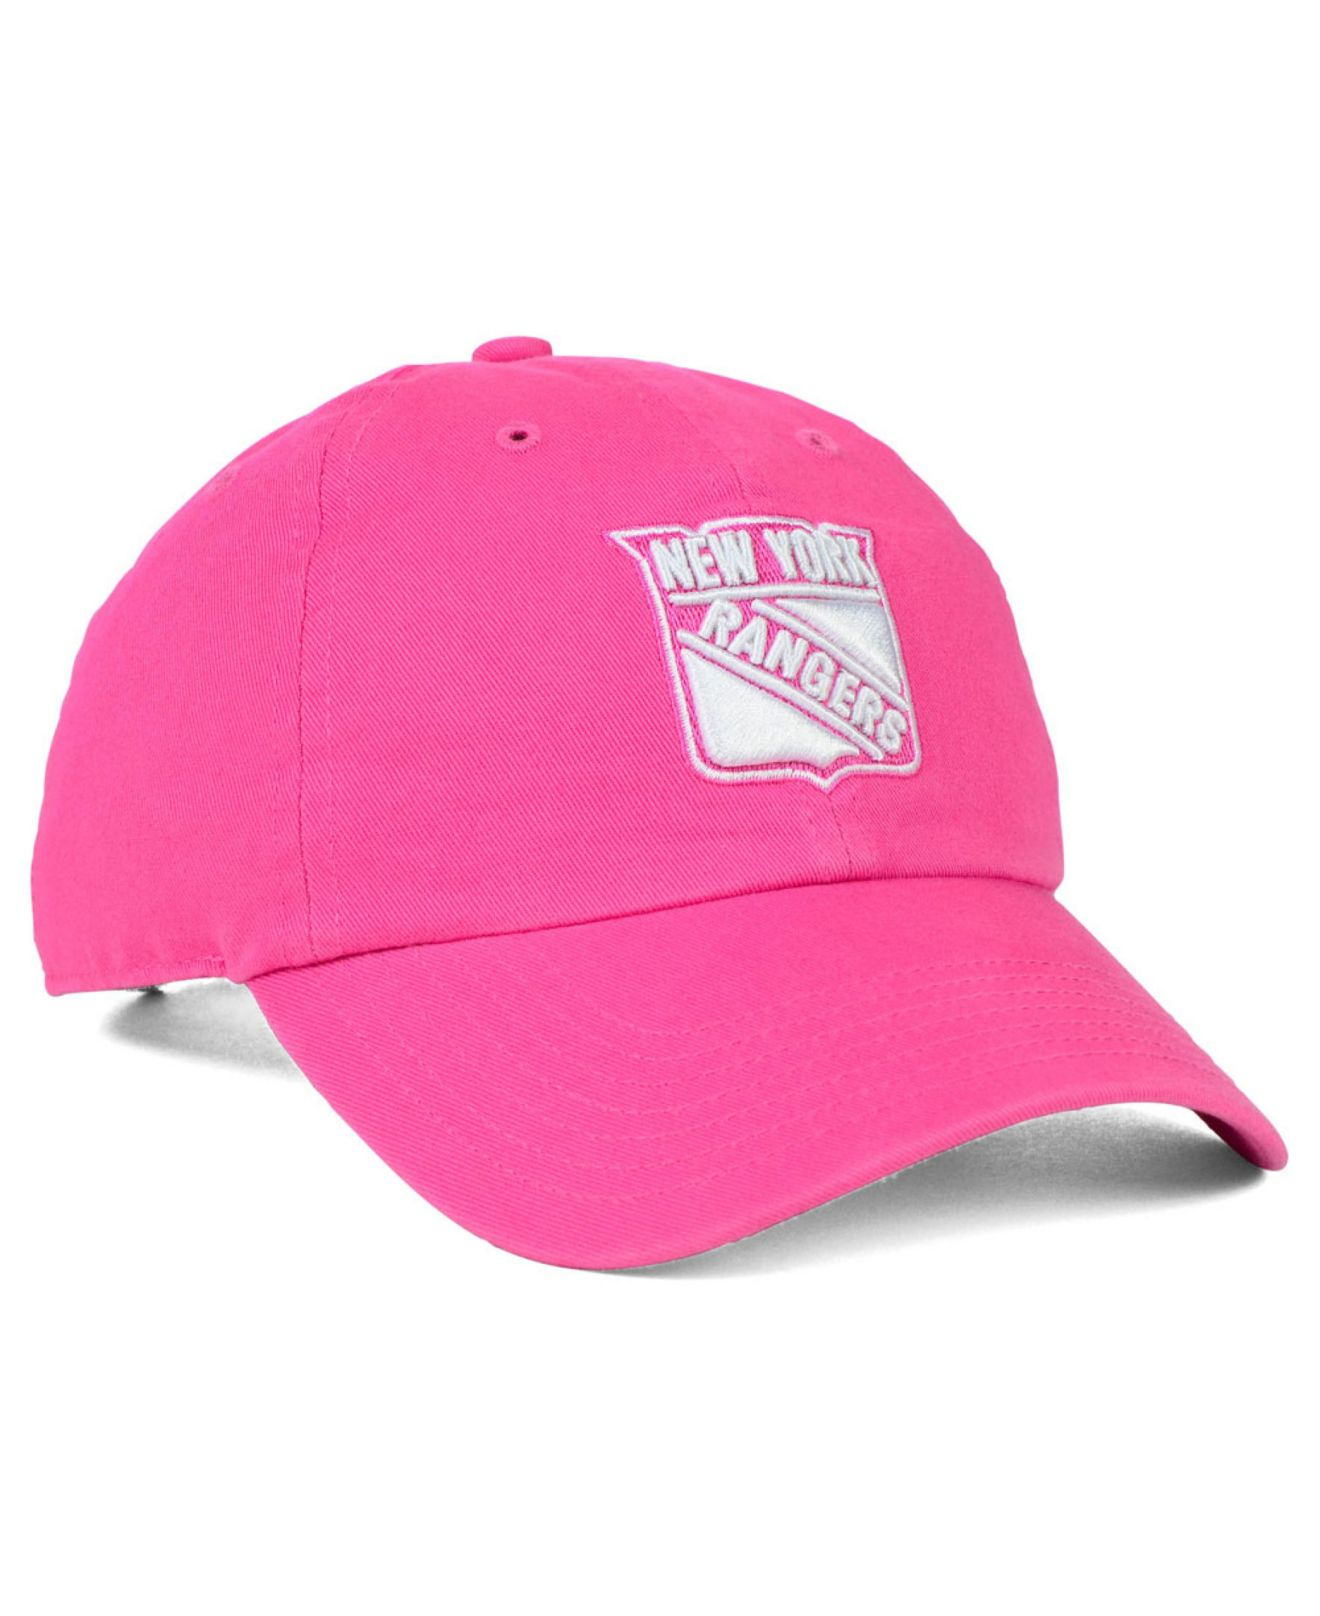 pink new york rangers hat